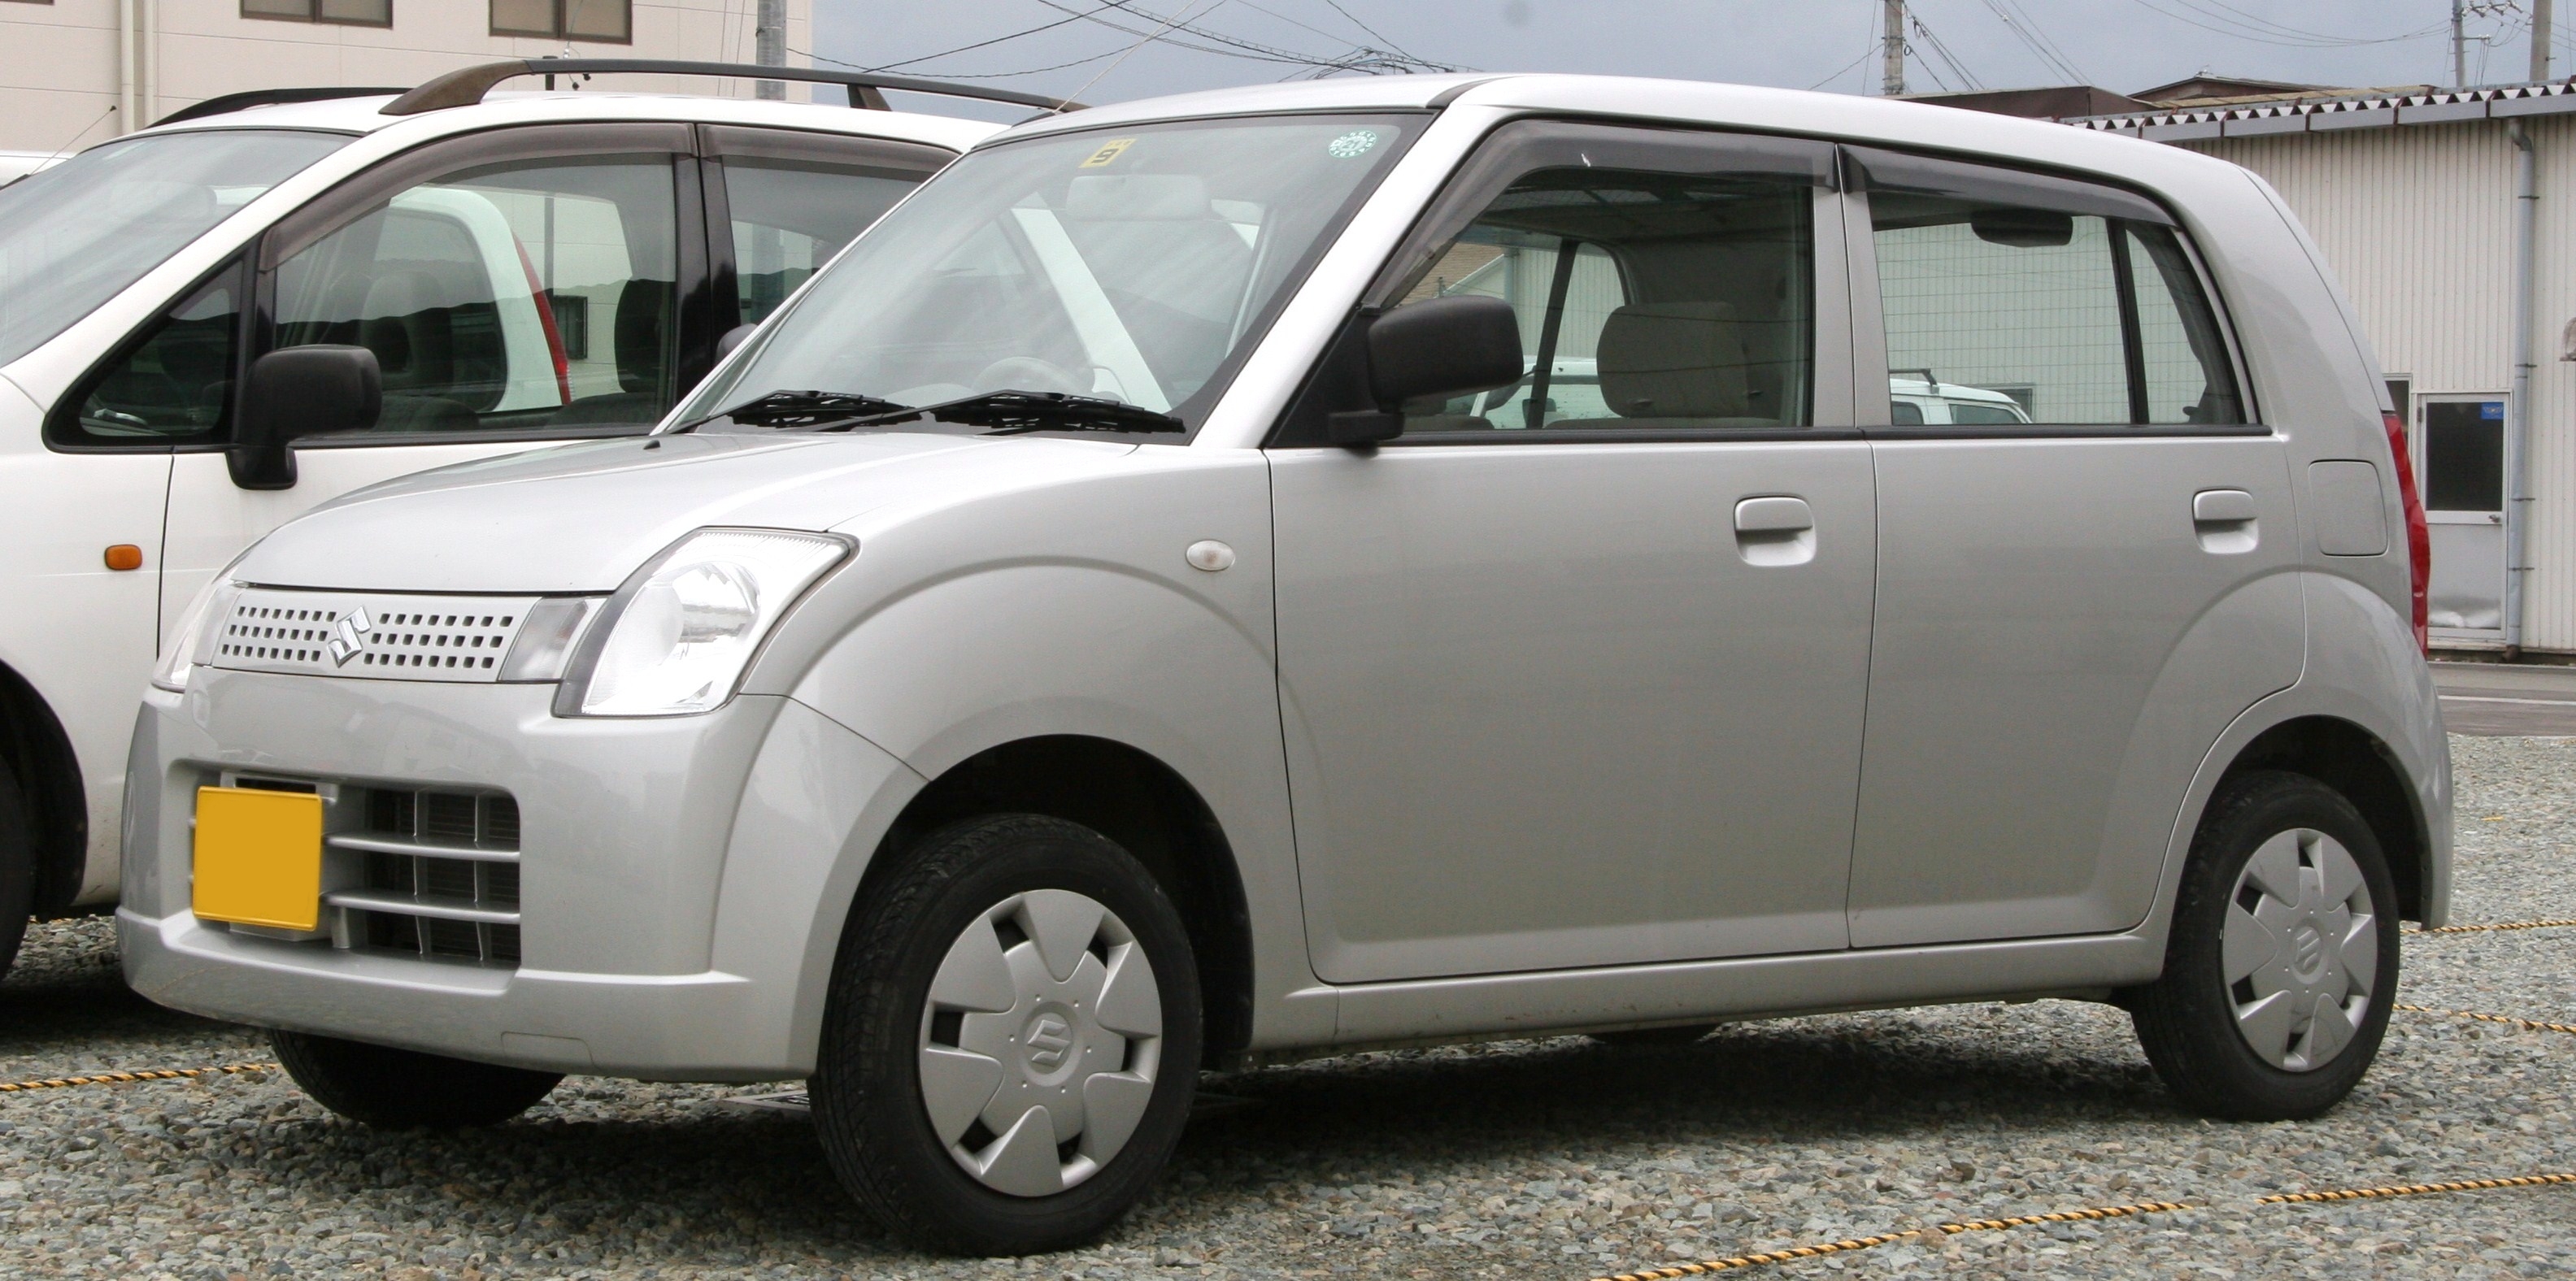 Suzuki Alto 6th Generation Exterior Side View